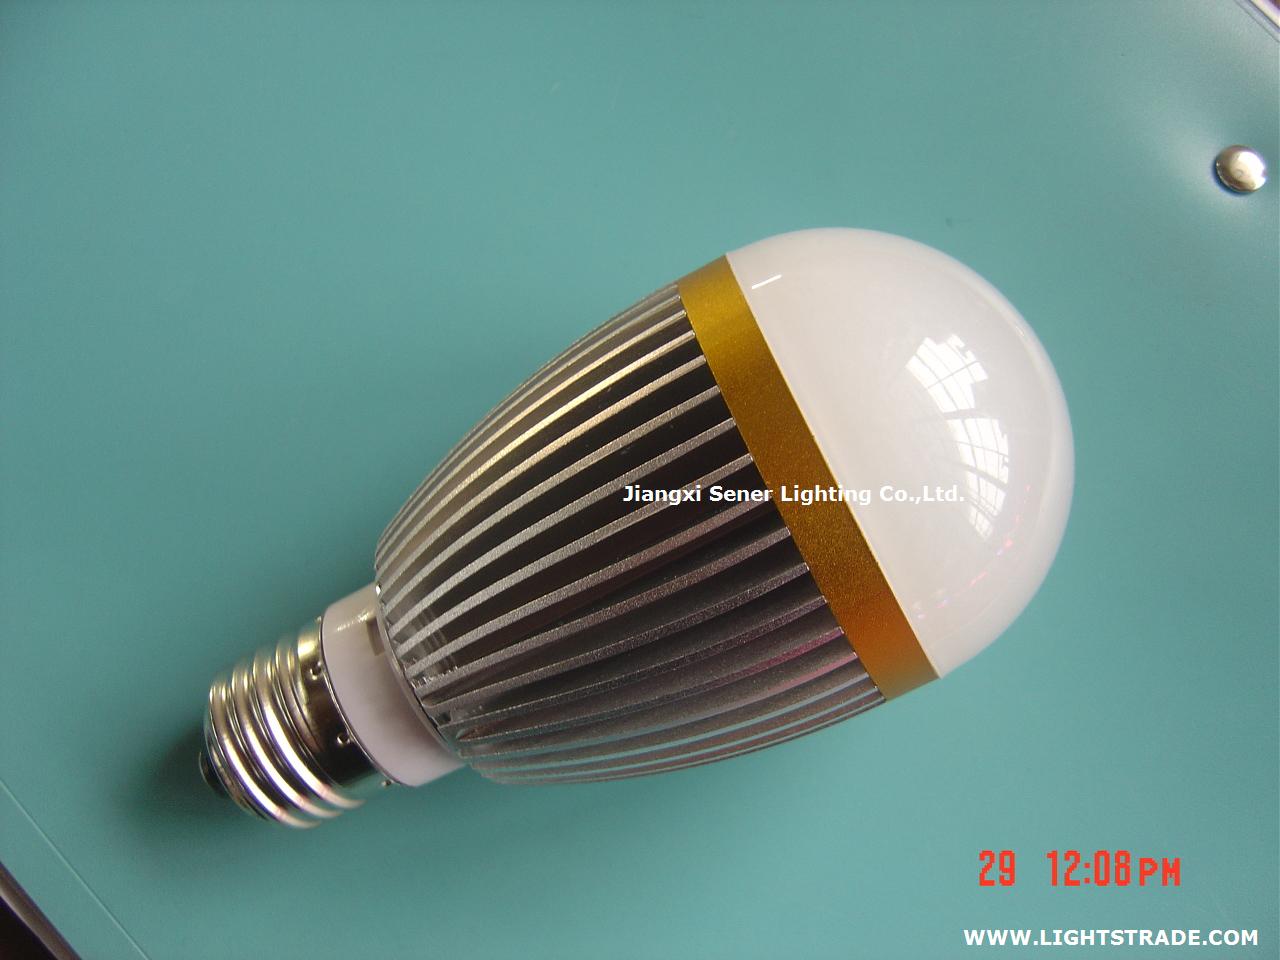 Sener hot sale 9w led bulb light